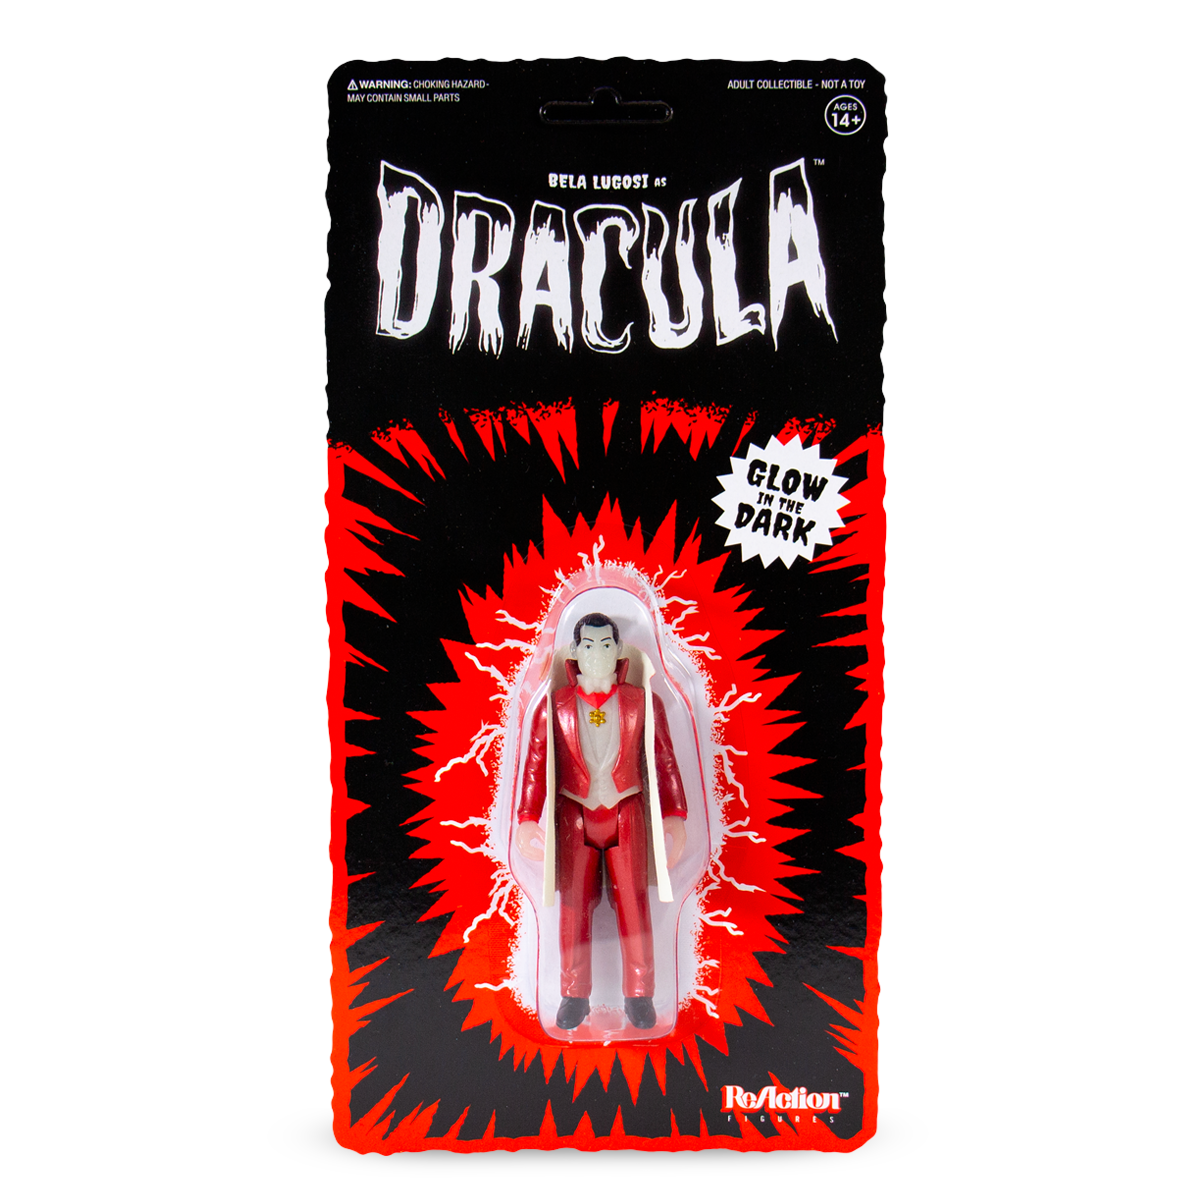 Universal Monsters ReAction Figure - Dracula (NYCC 2019)